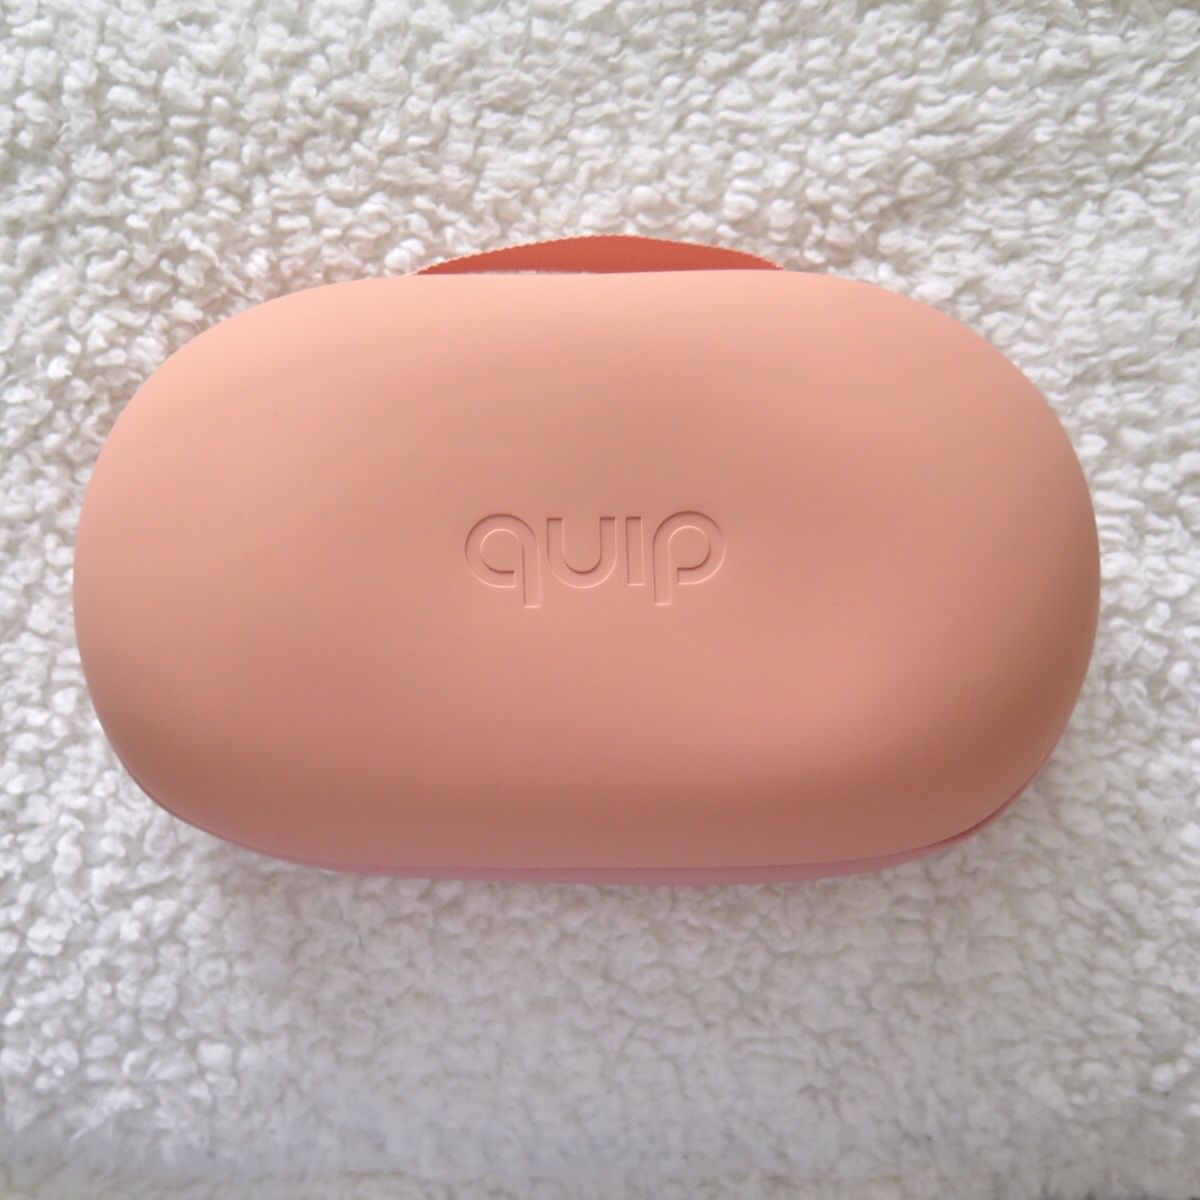 QUIP- Cooper Refresh Silicon Travel Bag / Tote Zip Coral /Pink / Orange / Blush Color